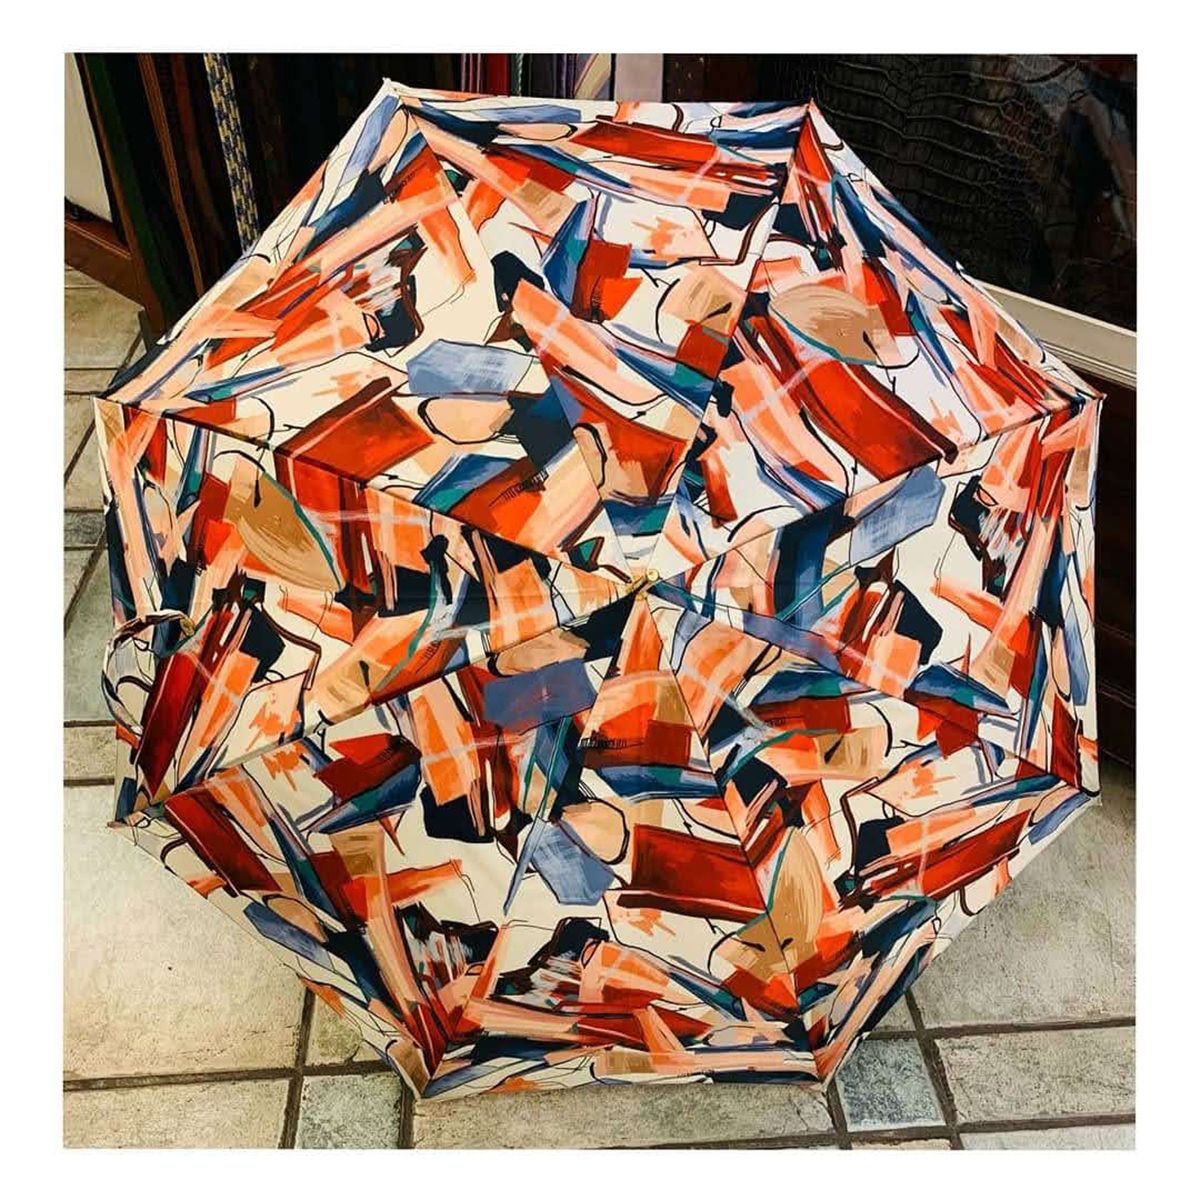 Paraguas de calidad en Logroño